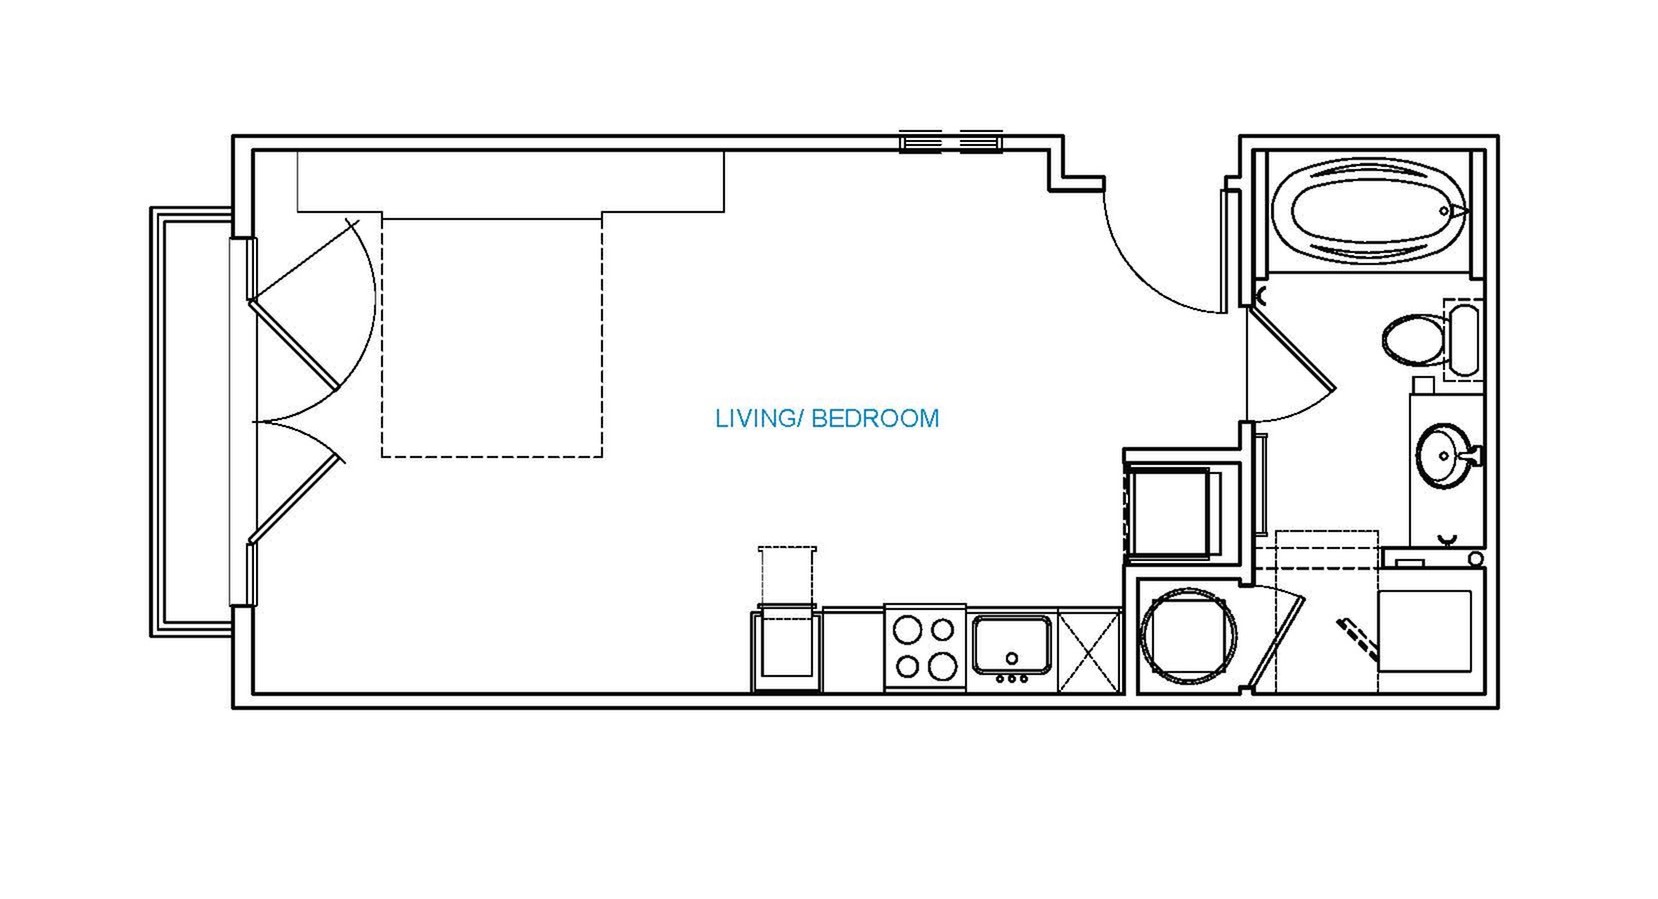 Floorplan - S1, 1 Bed, 1 Bath, 430 square feet